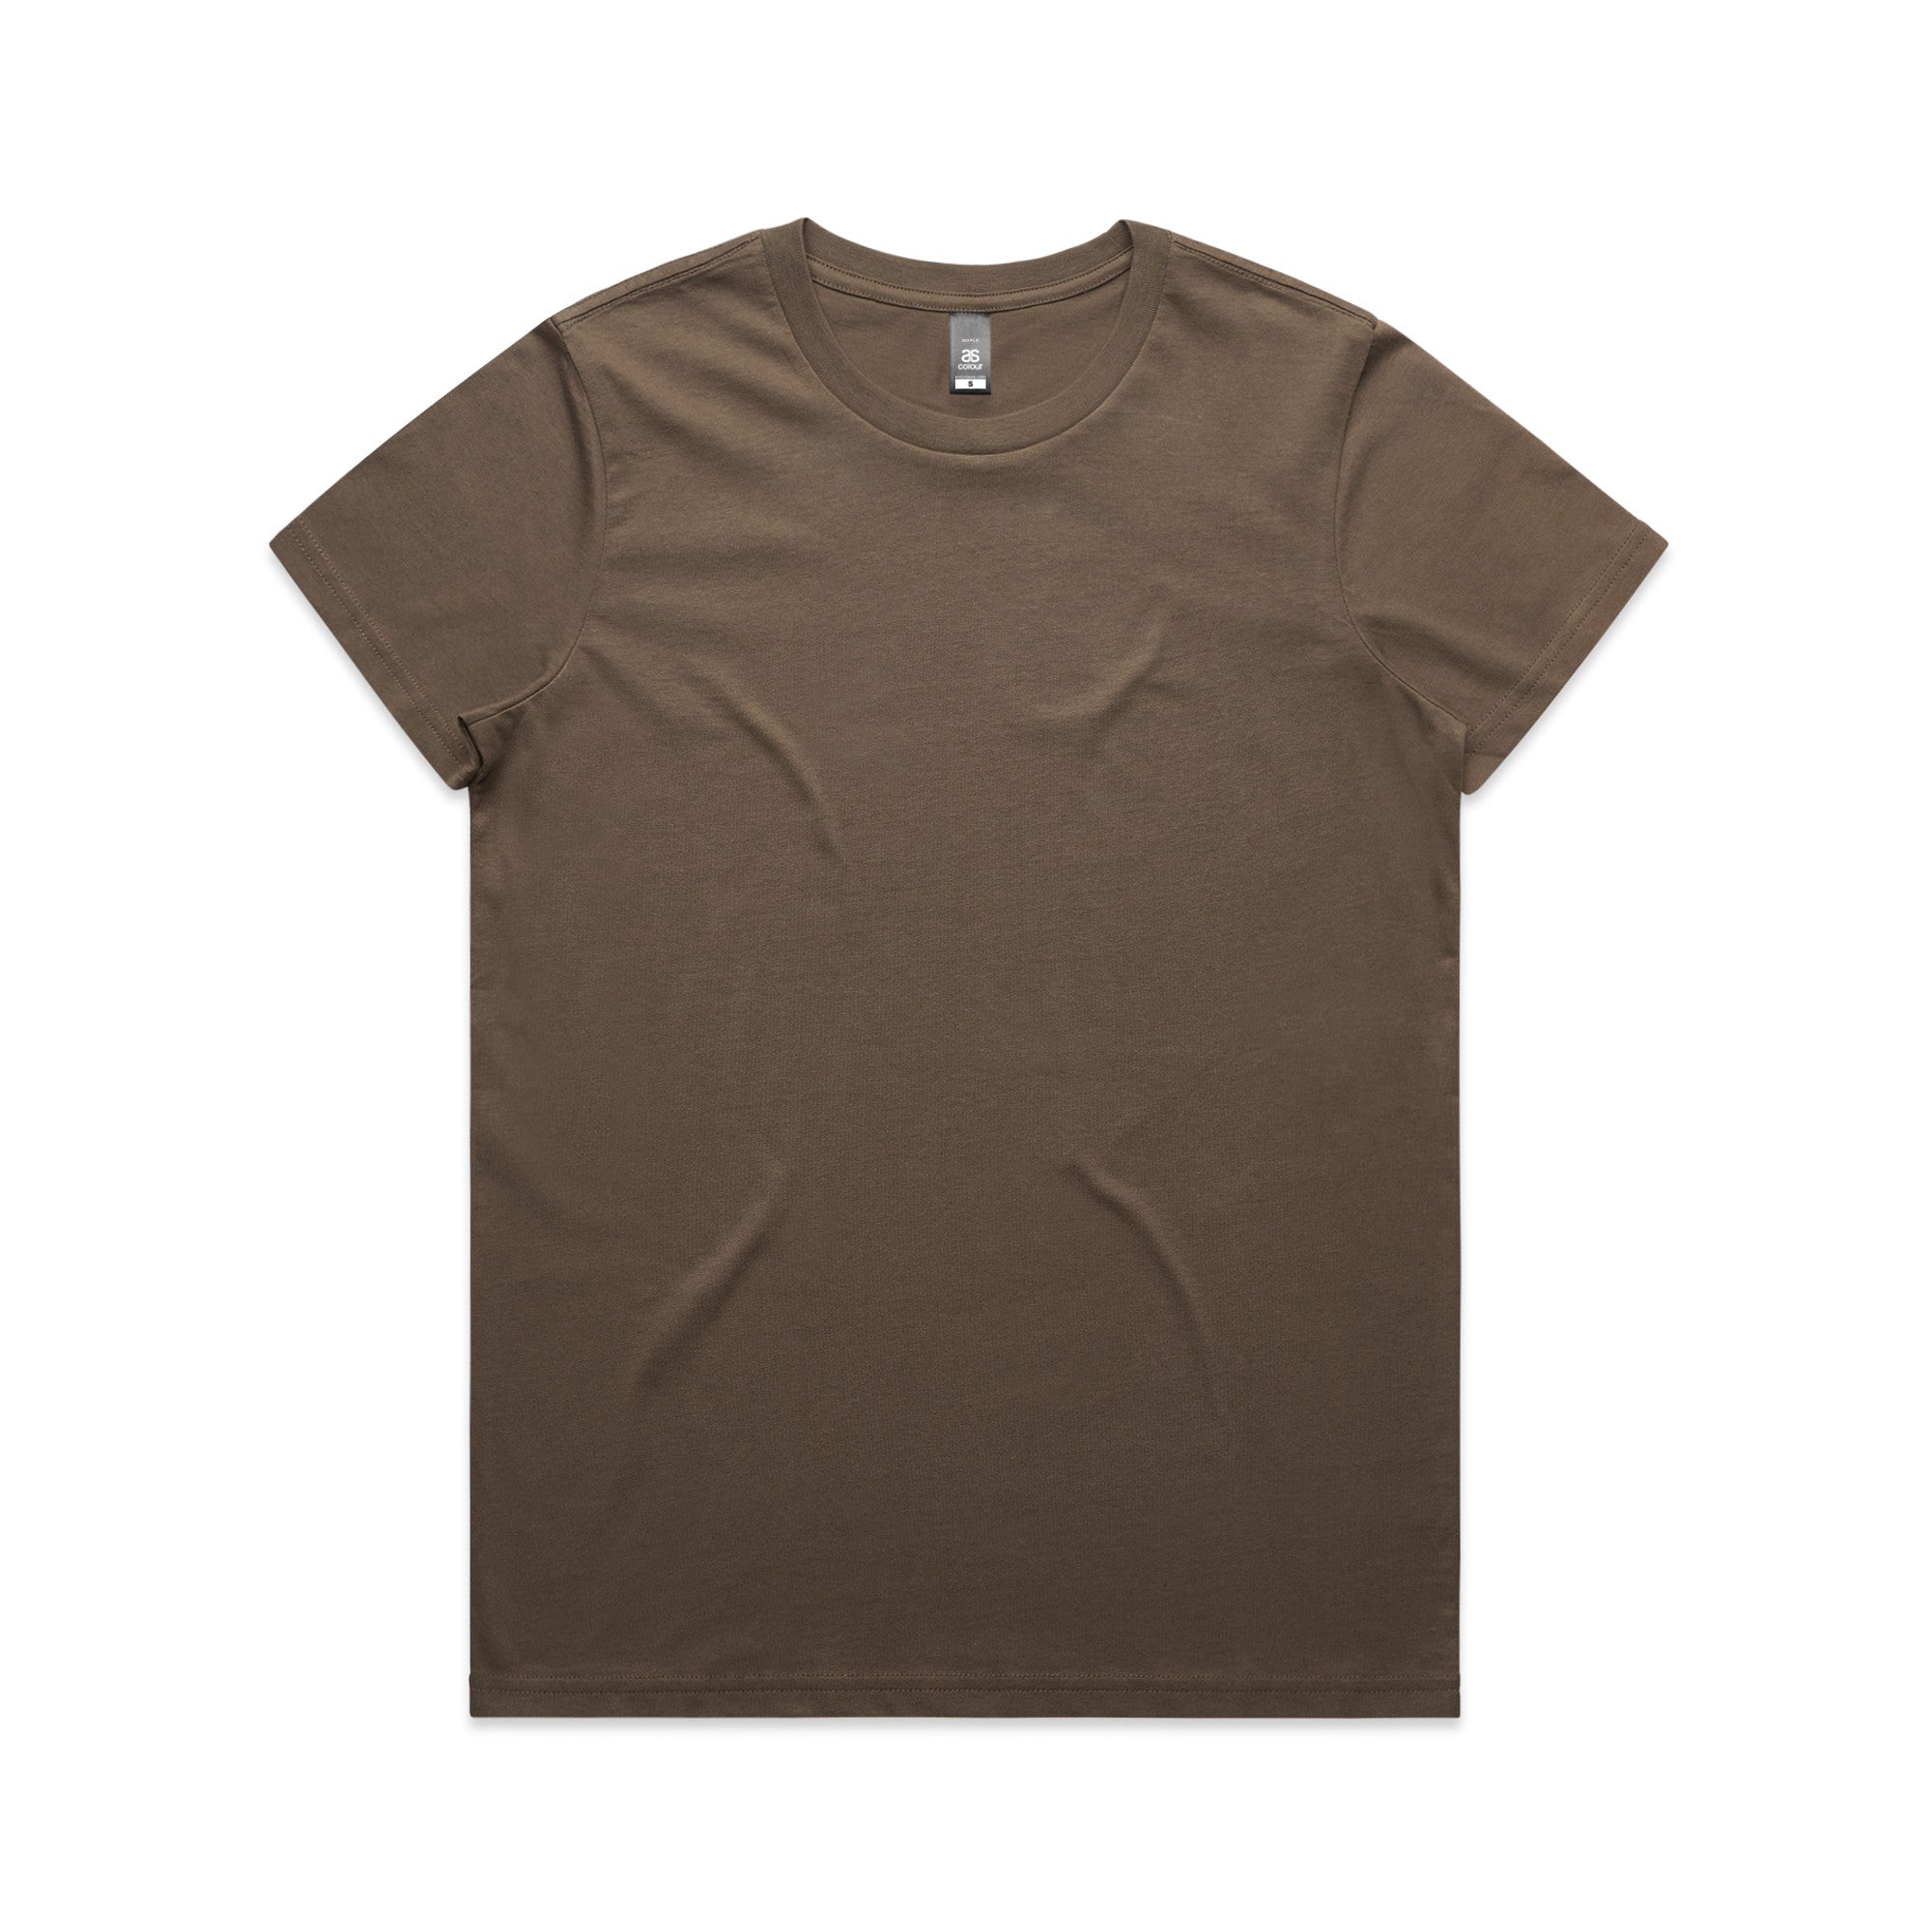 4001 Maple Tee, T-Shirts, Women